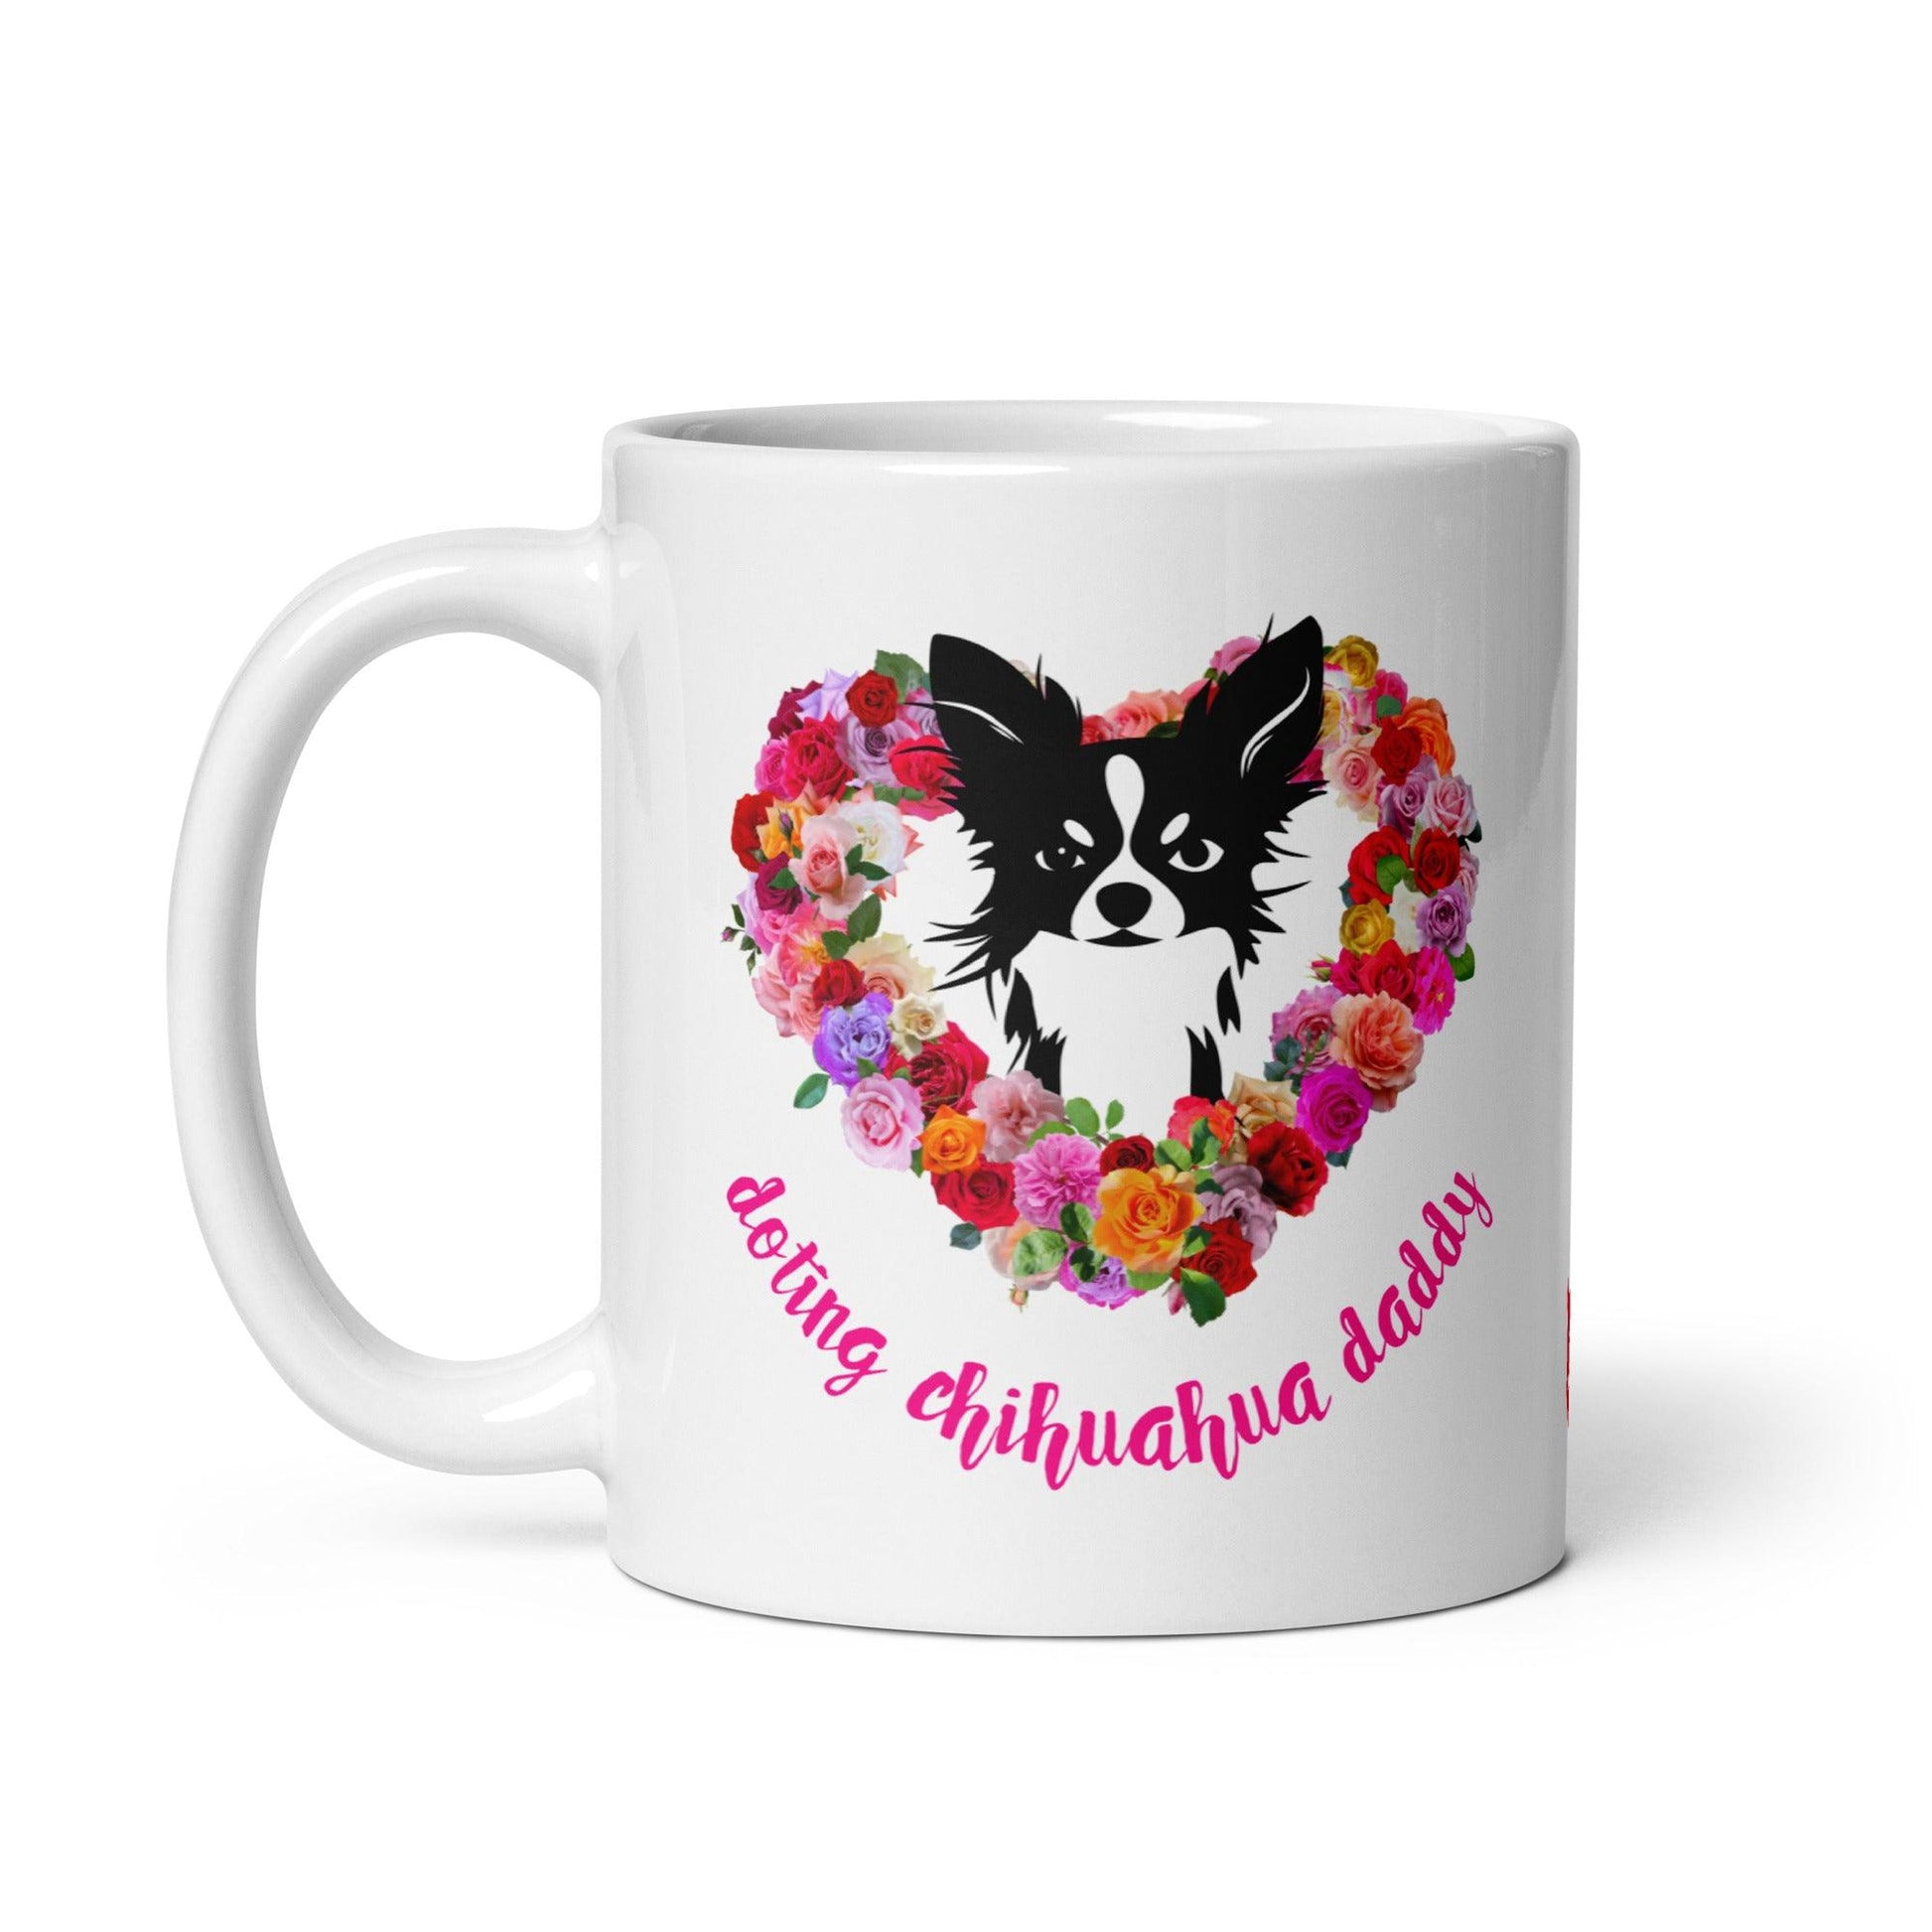 Doting Chihuahua Daddy - Chihuahua and Roses - White Glossy Mug - 3 size options - Chimigos